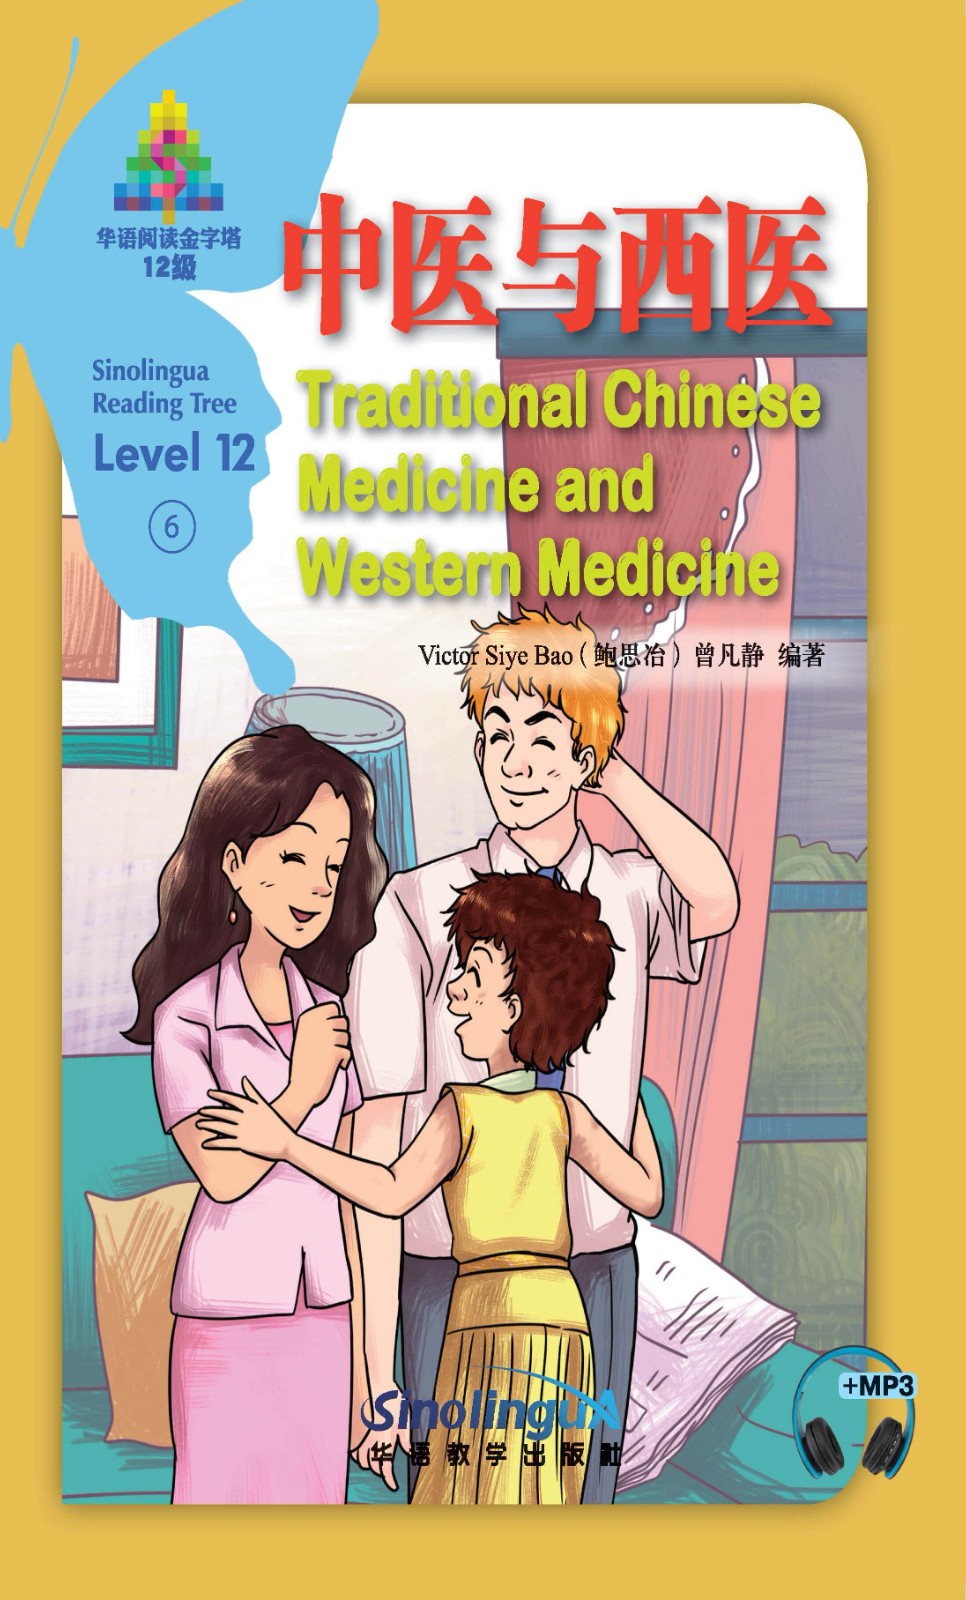 Sinolingua Reading Tree Level 12·6.Traditional Chinese Medicine and Western Medicine